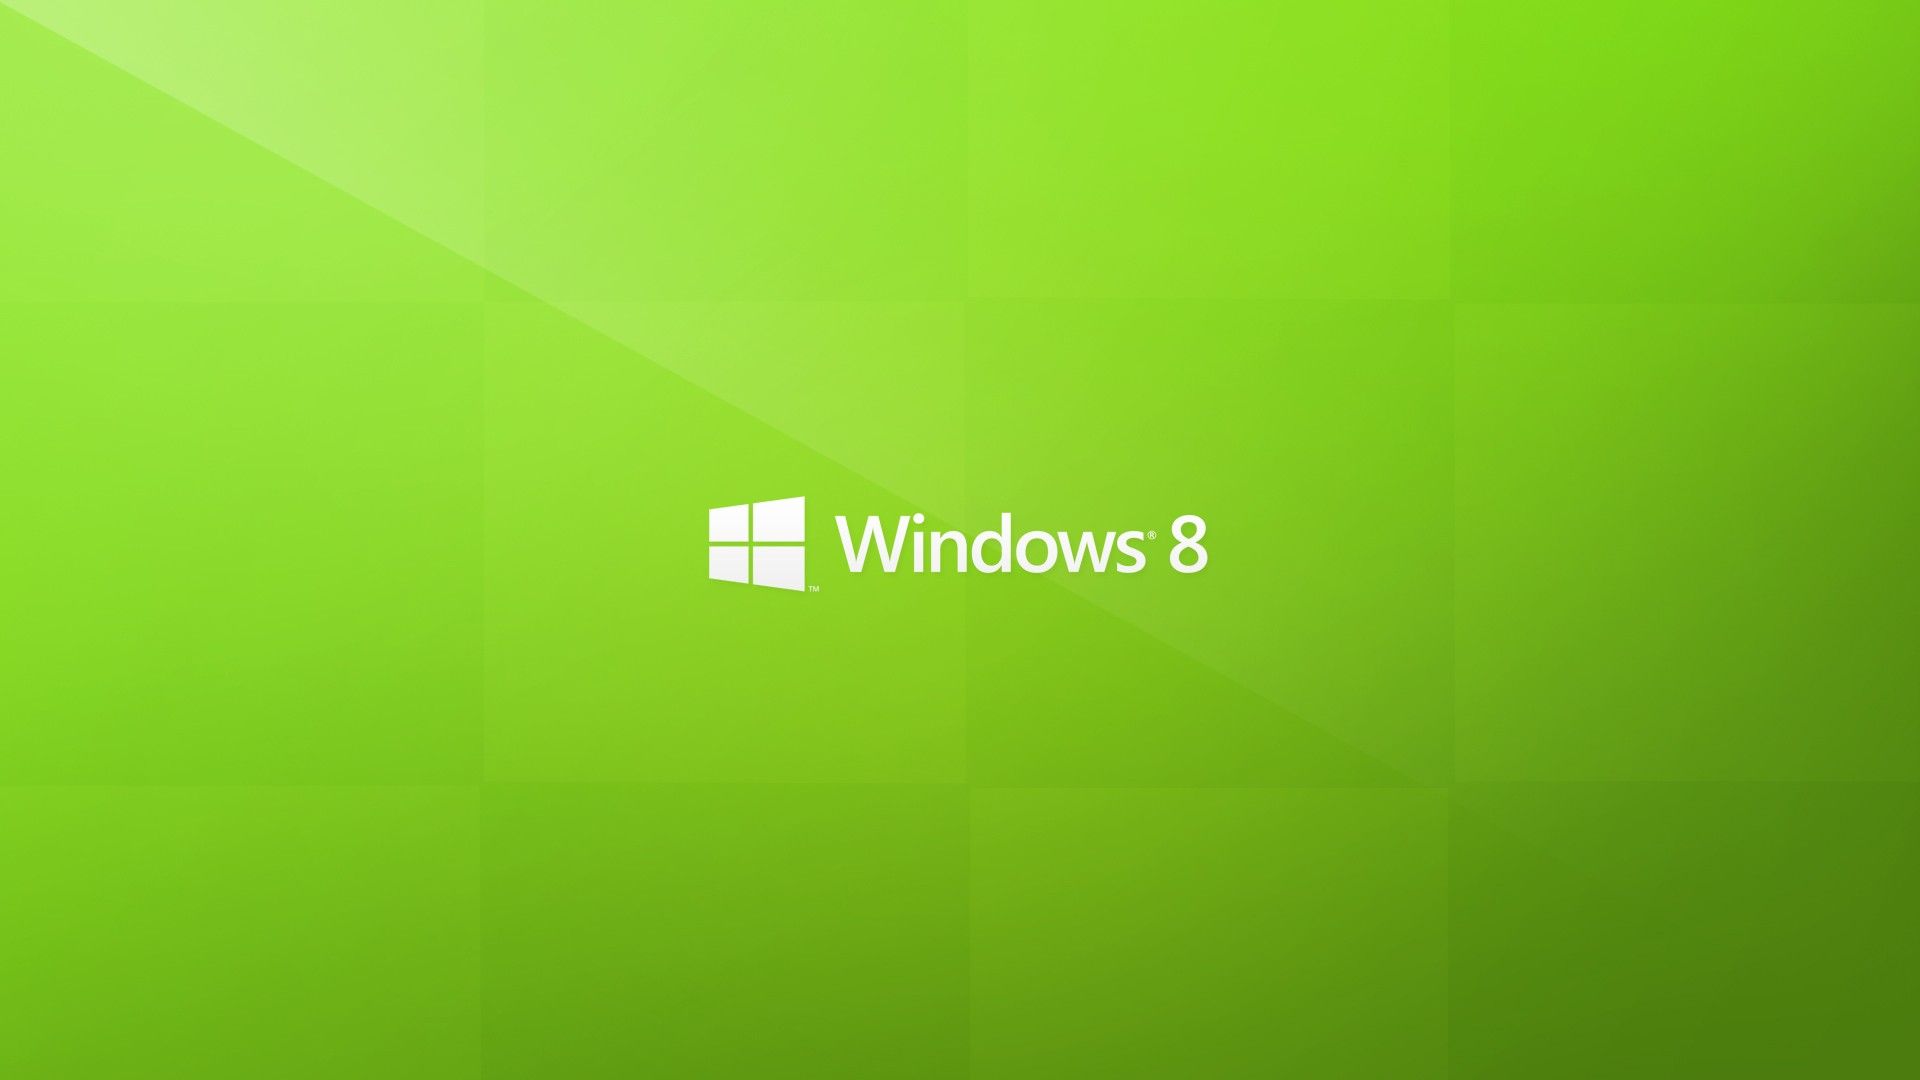 HD Green Windows 8 Wallpaper